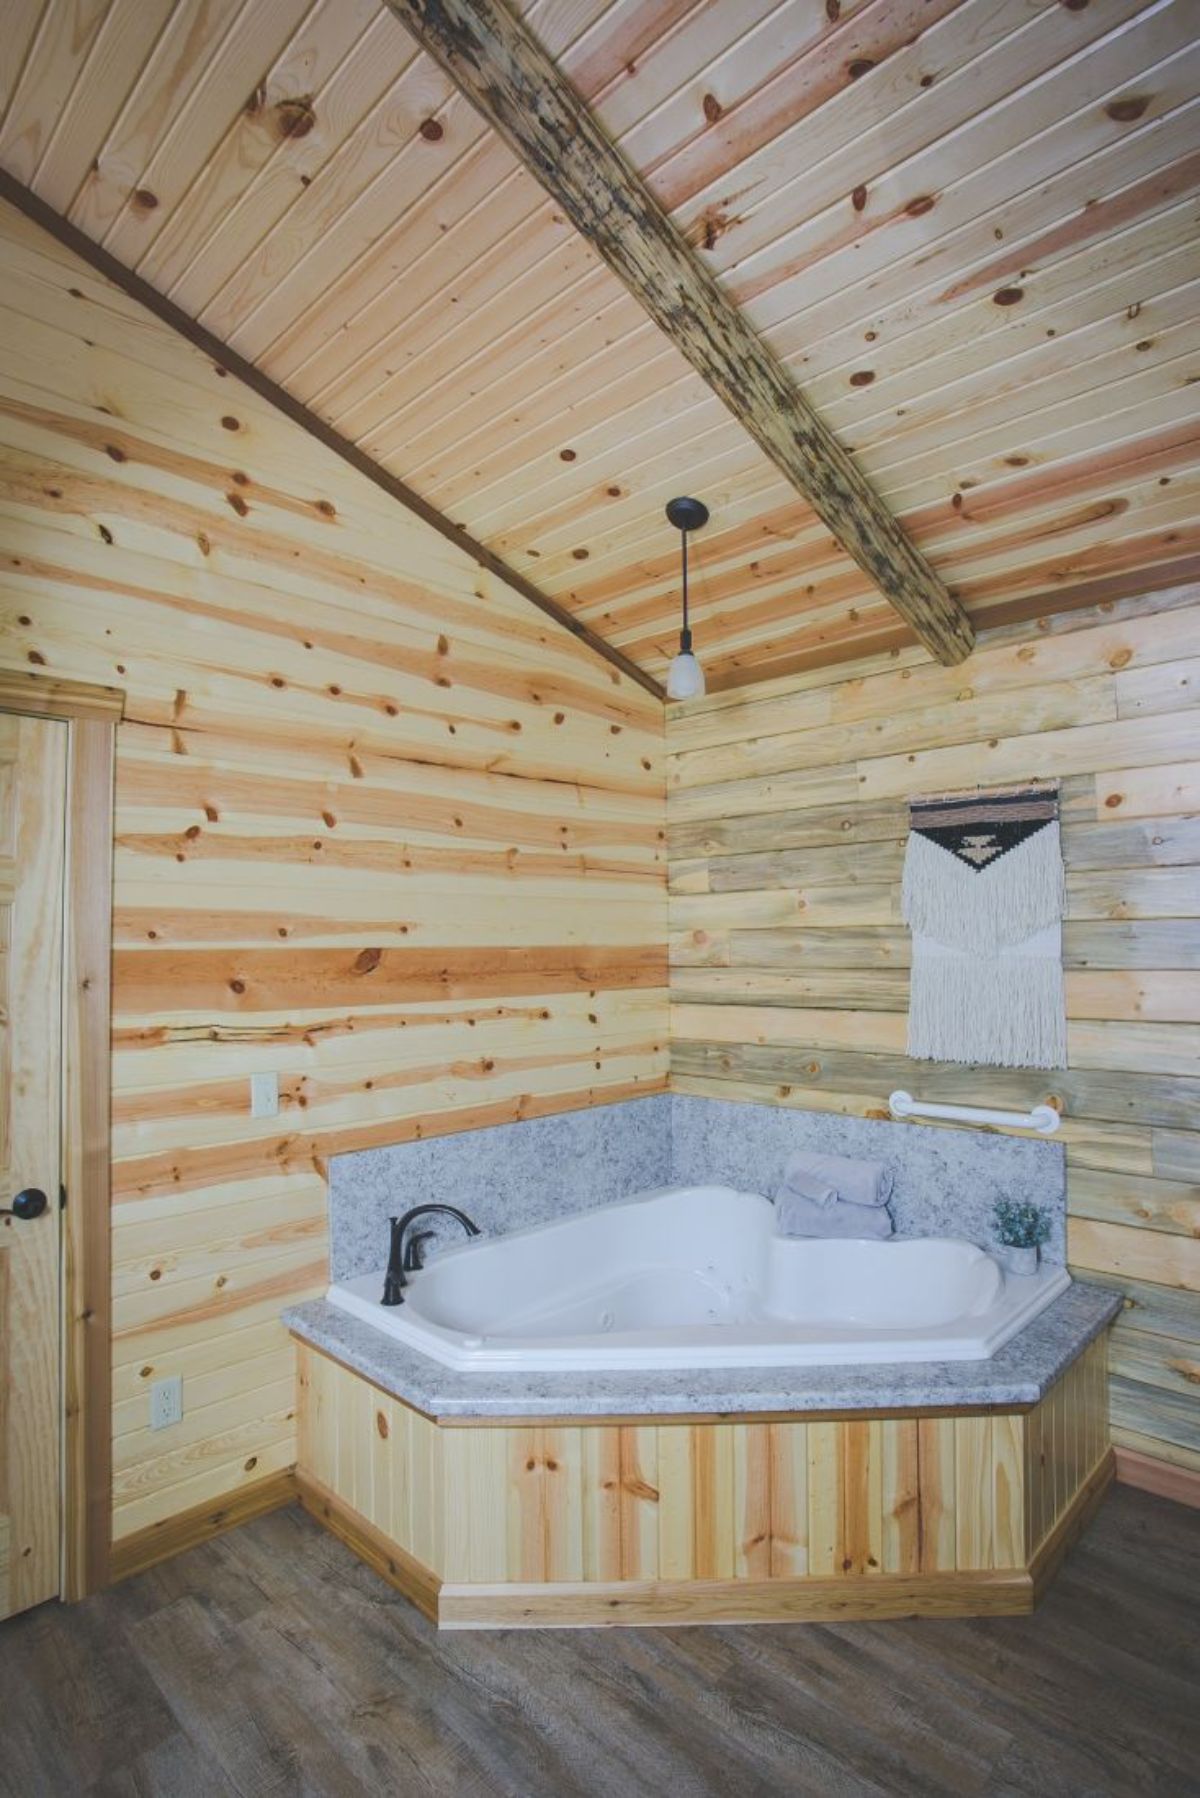 corner Jacuzzi bathtub with white tub and gray tile surround